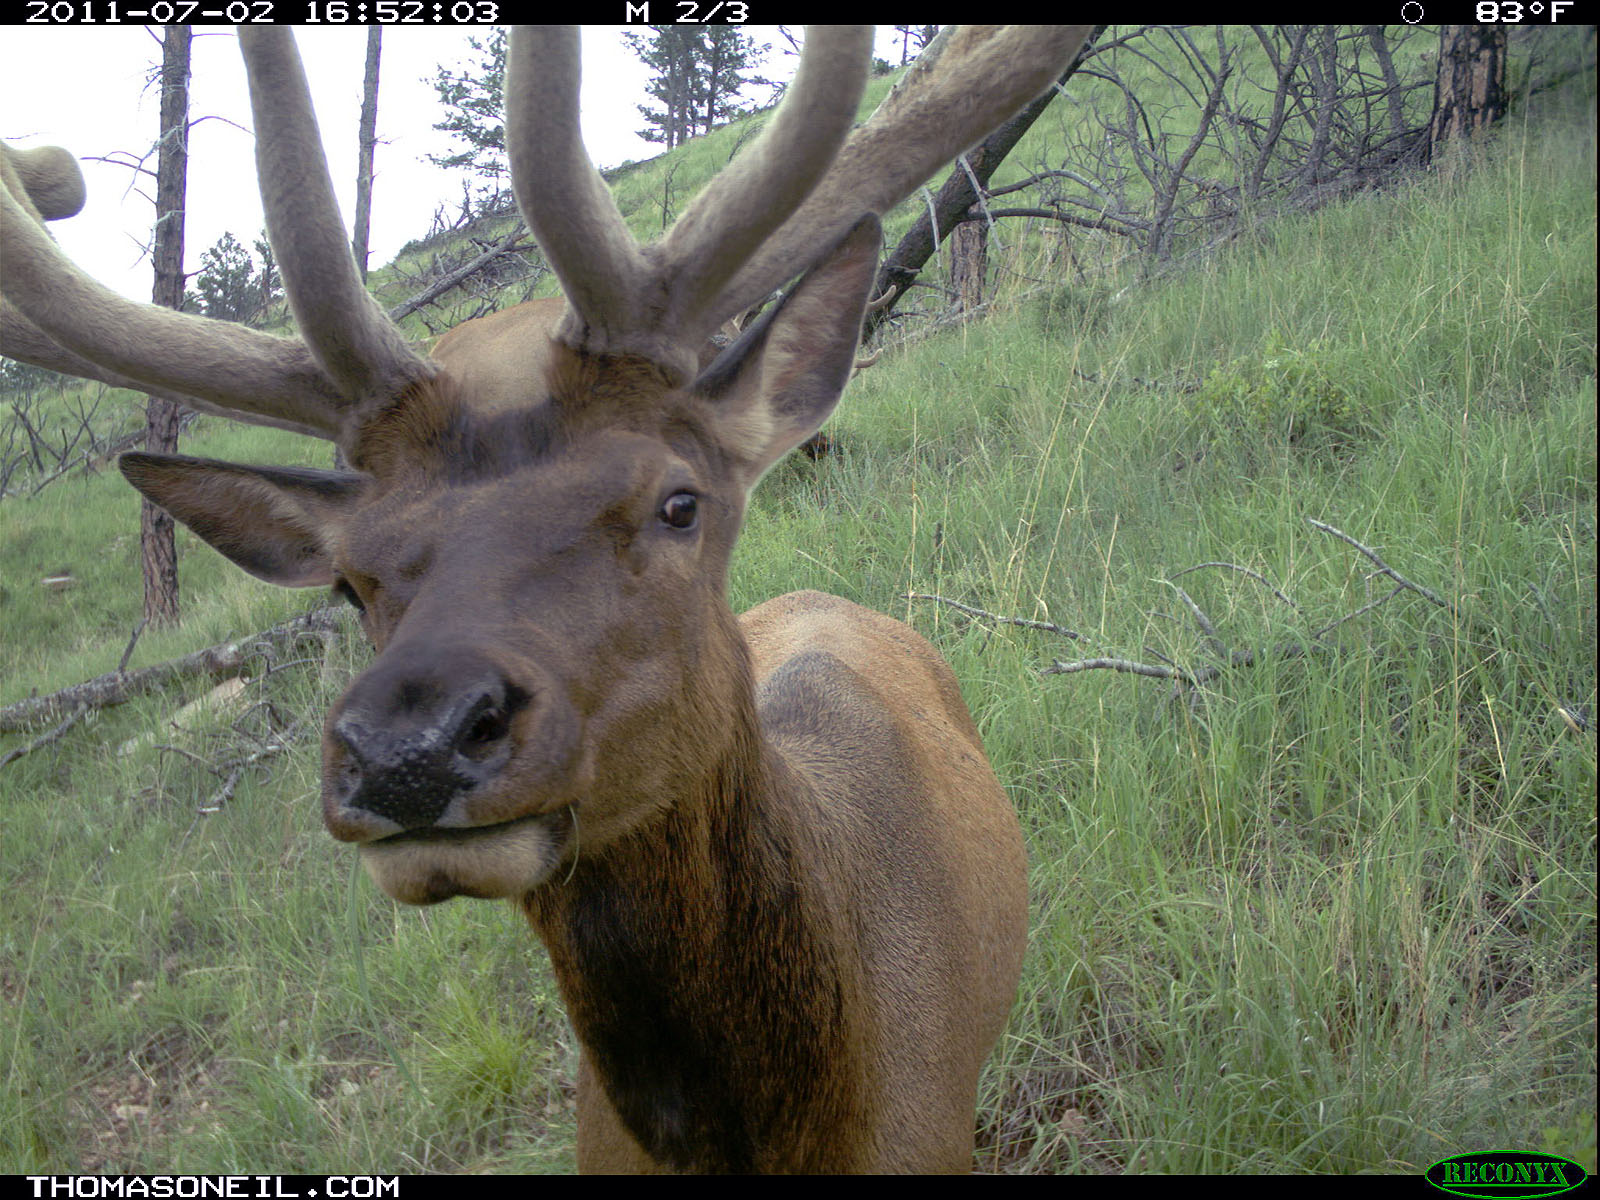 Elk on trail camera, Wind Cave National Park, South Dakota, July 2011.